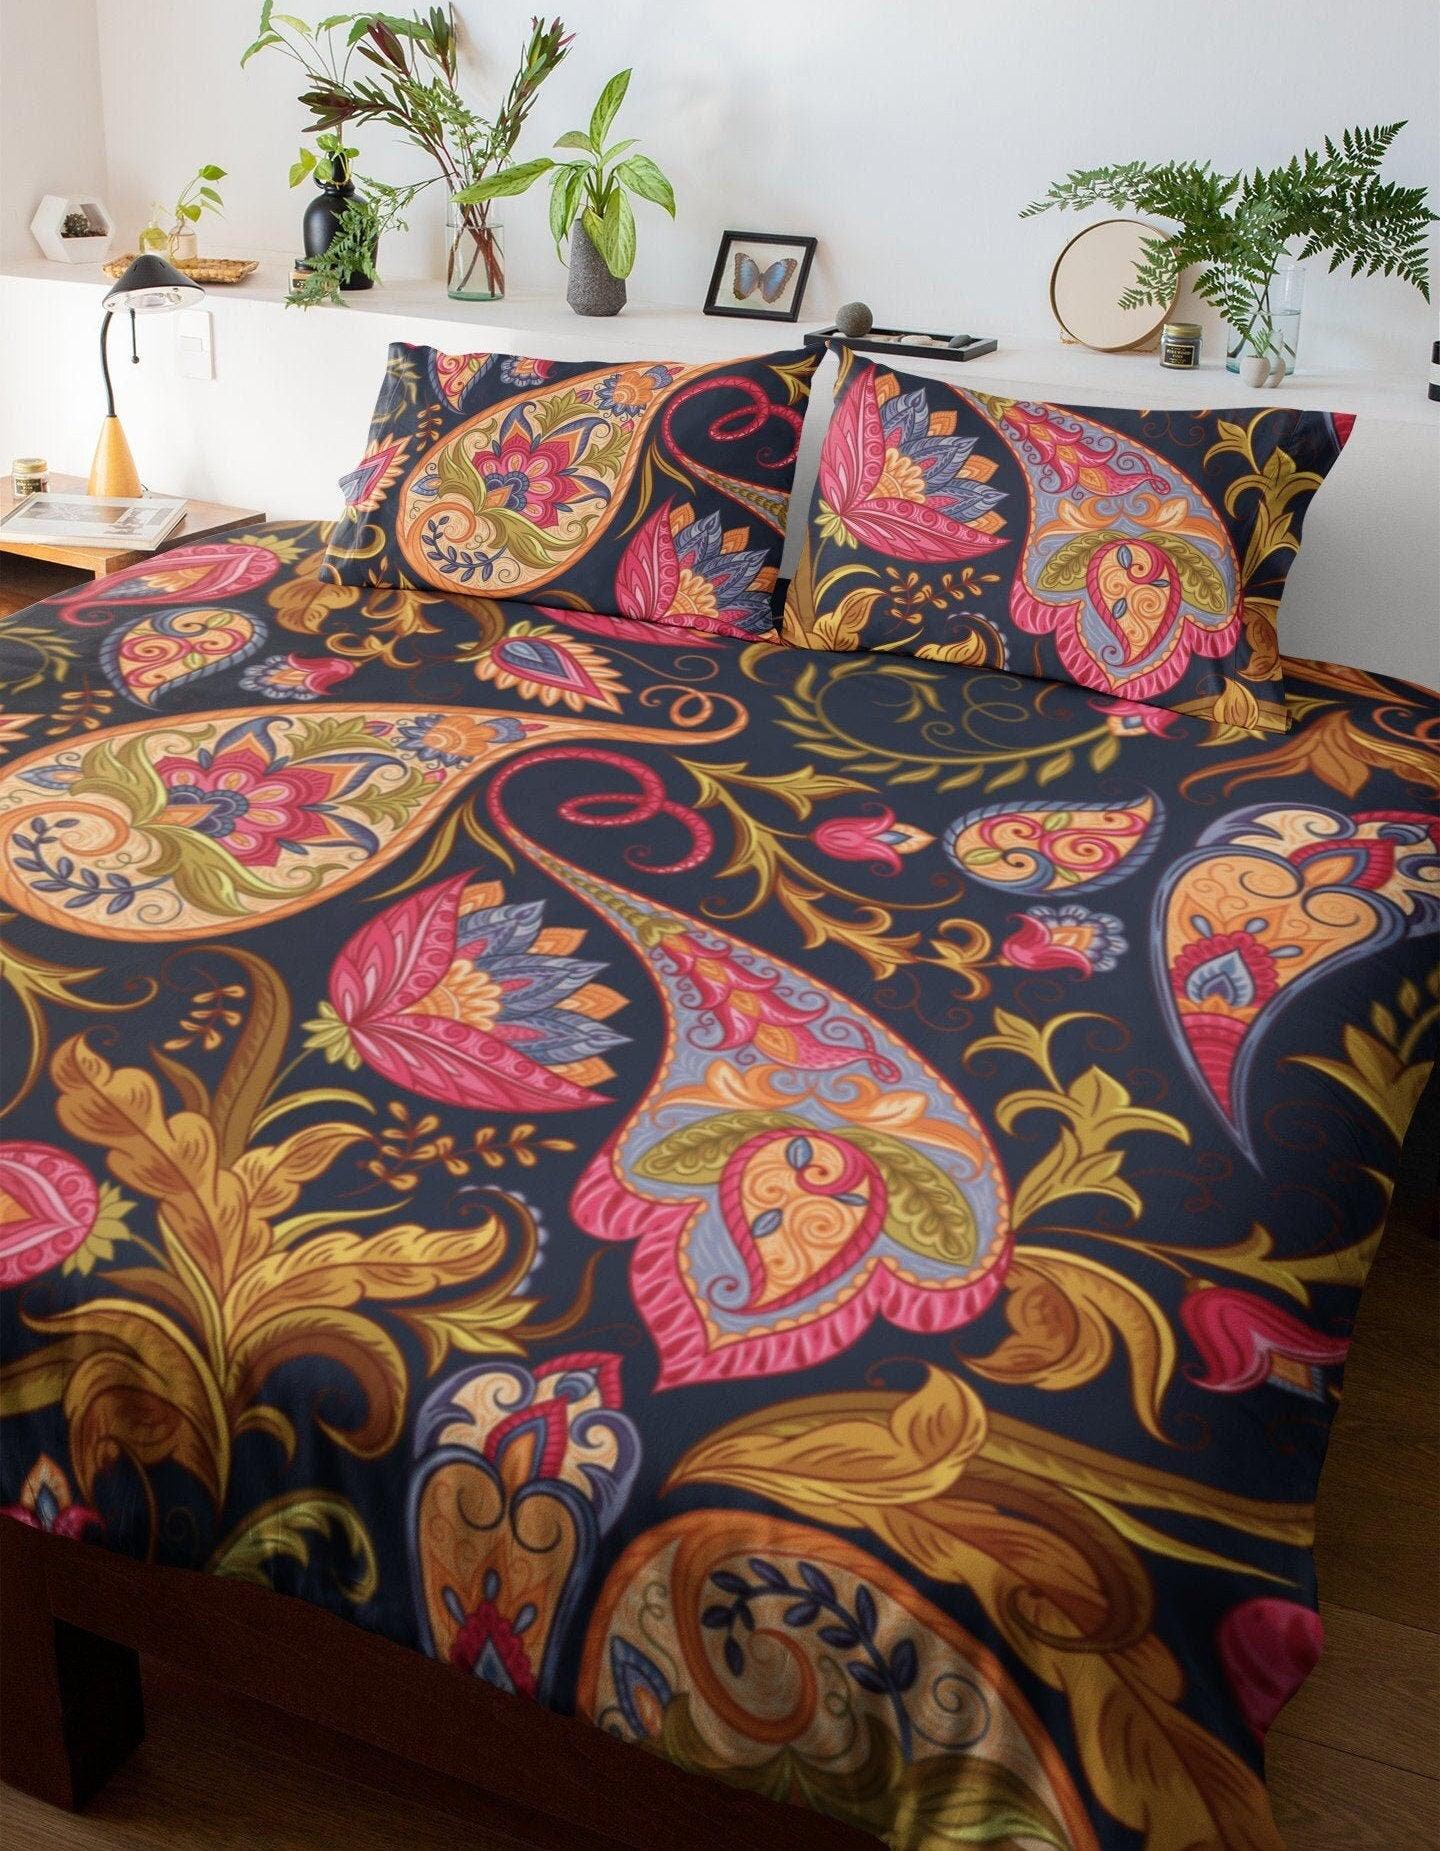 daintyduvet Paisley Black Duvet Cover Set | Dorm Bedding Set with Pillow Cover Case